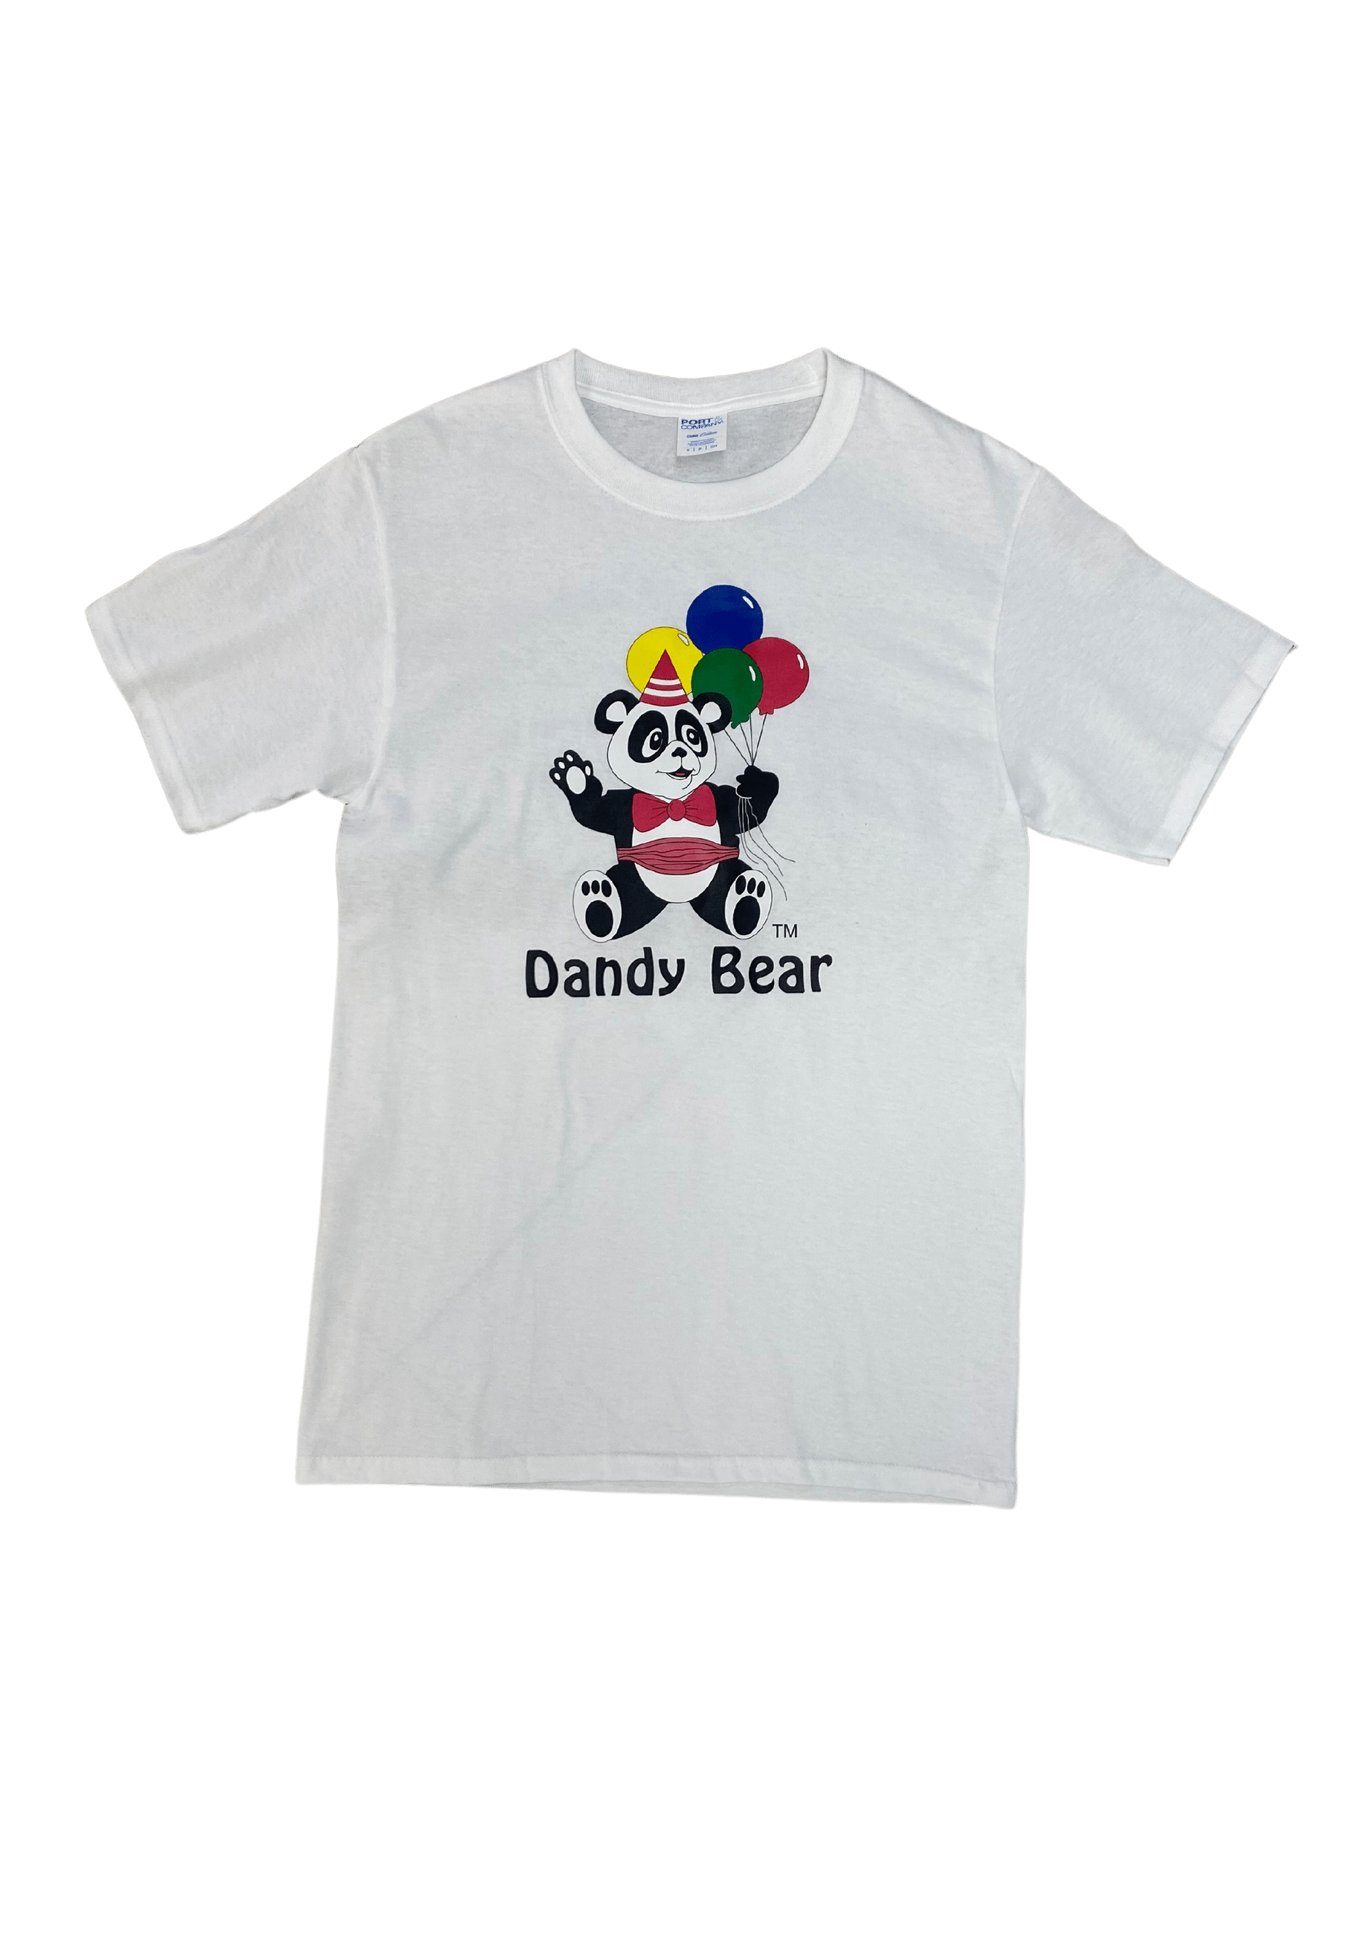 Dandy Bear Classic Adult T-shirt